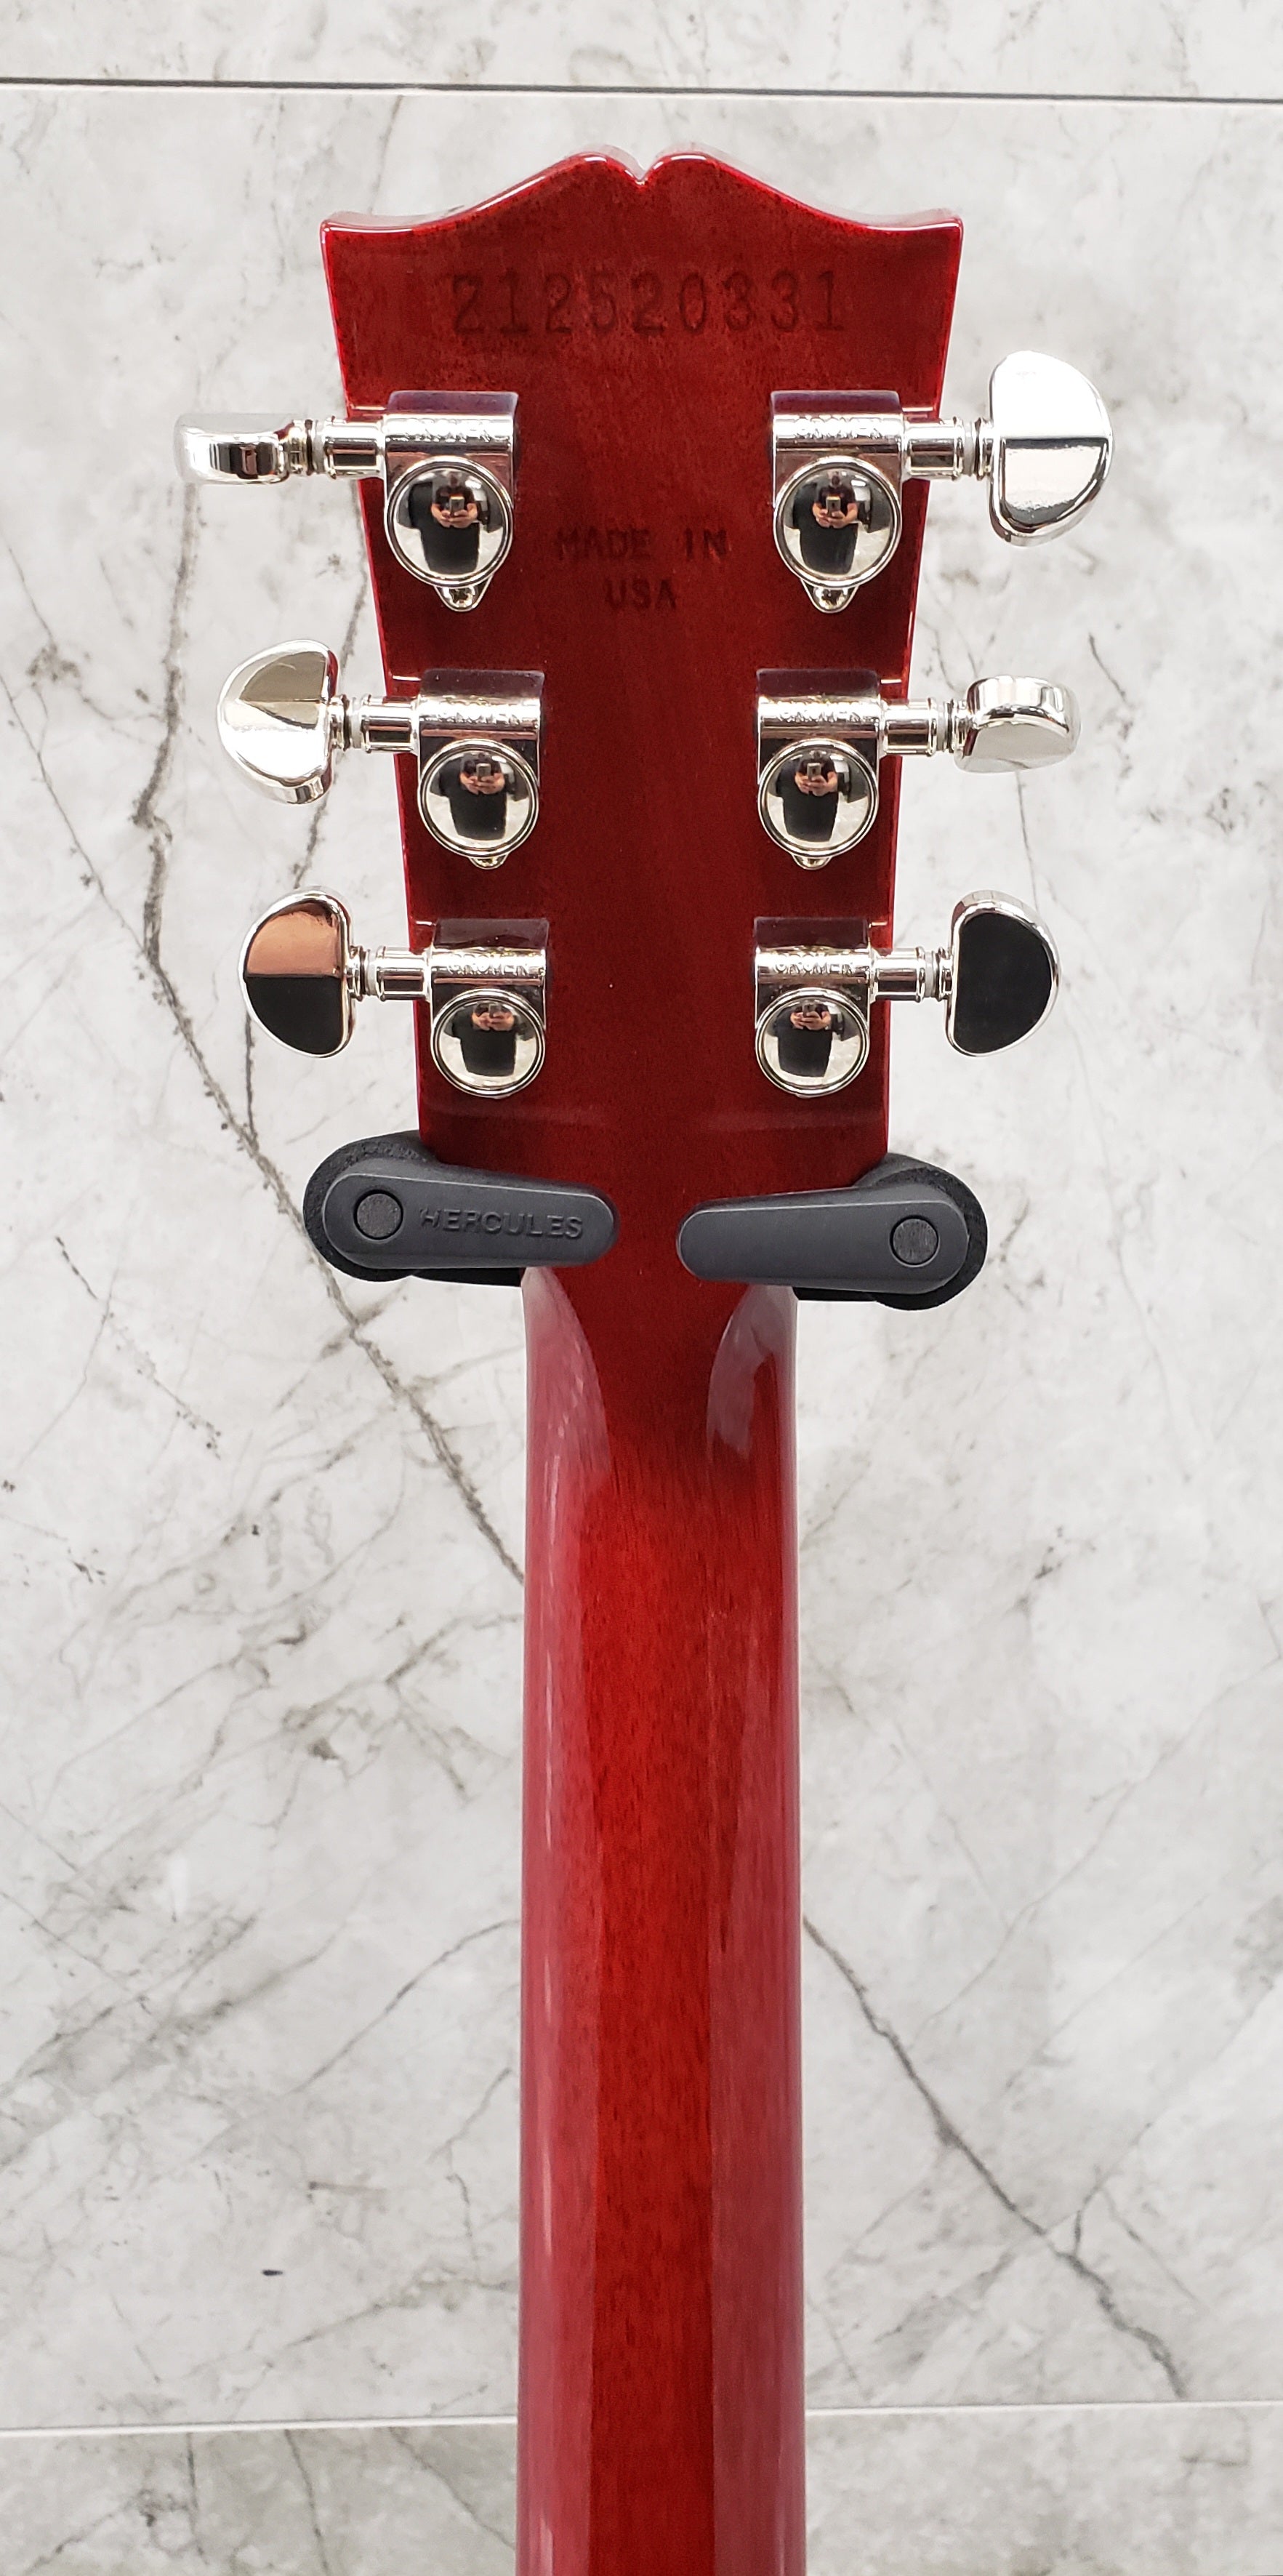 Gibson Les Paul Standard 60s Bourbon Burst LPS600BBNH SERIAL NUMBER 212520331 - 10.2 LBS